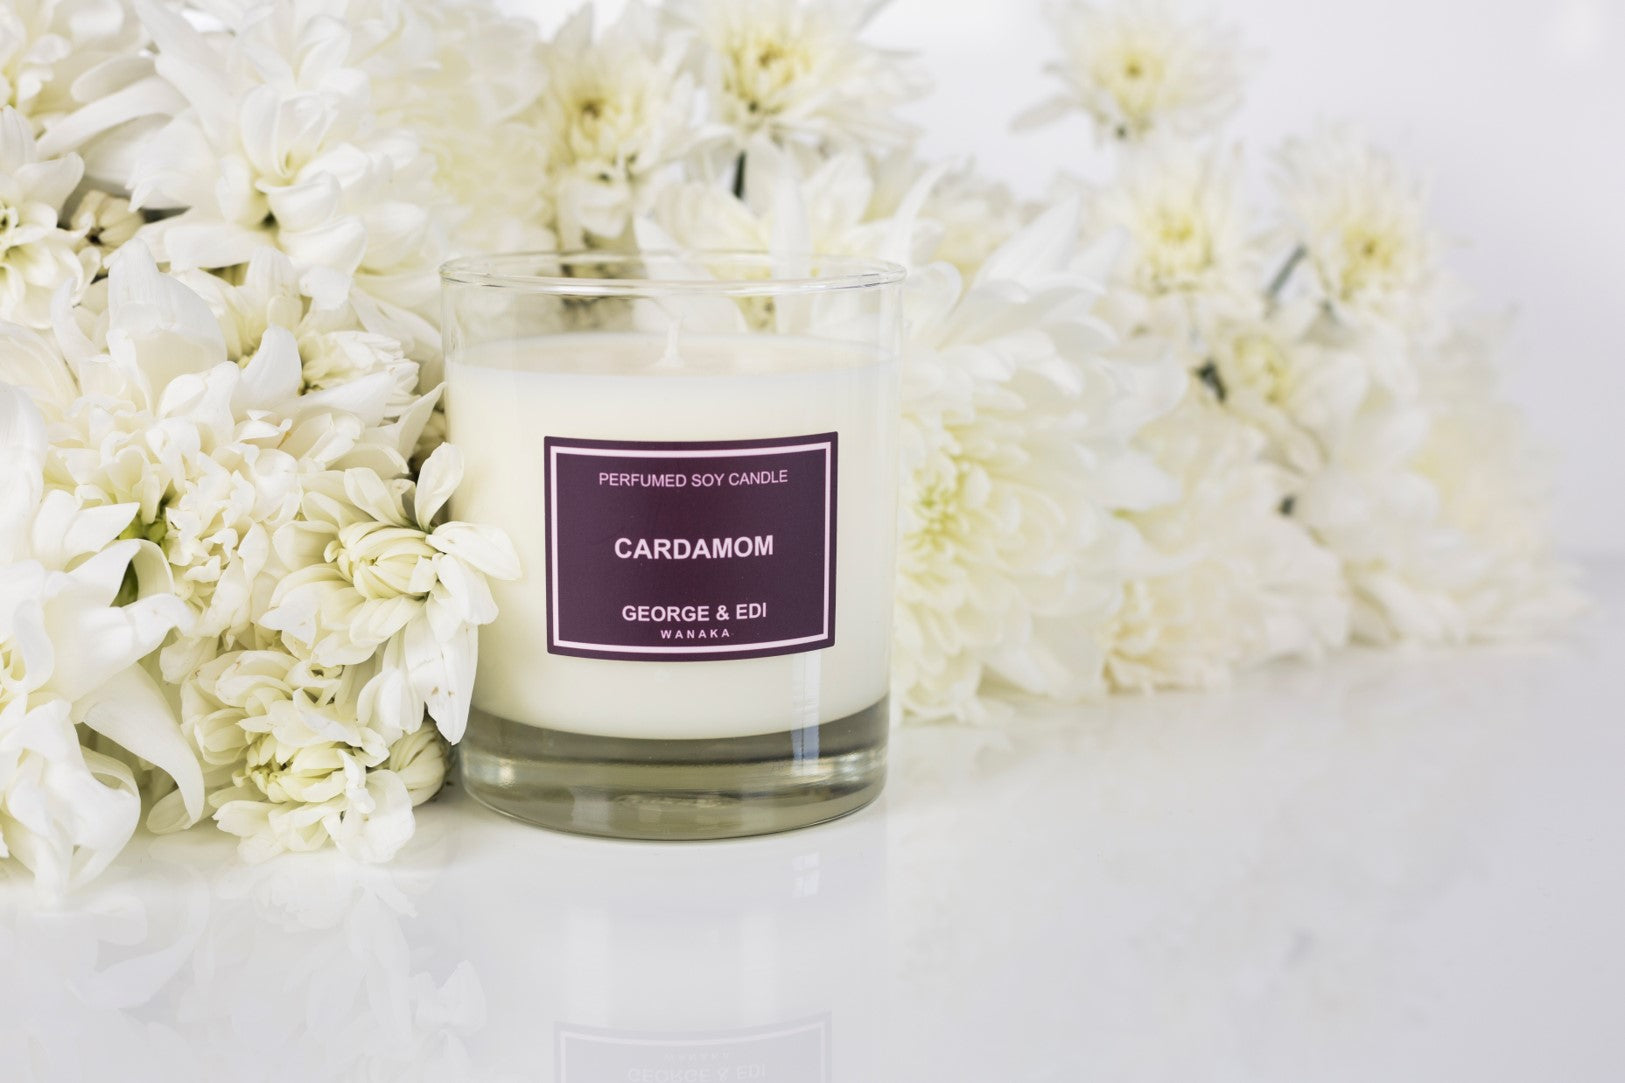 George & Edi Perfumed Soy Candle   - Cardamom LIMITED  EDITION